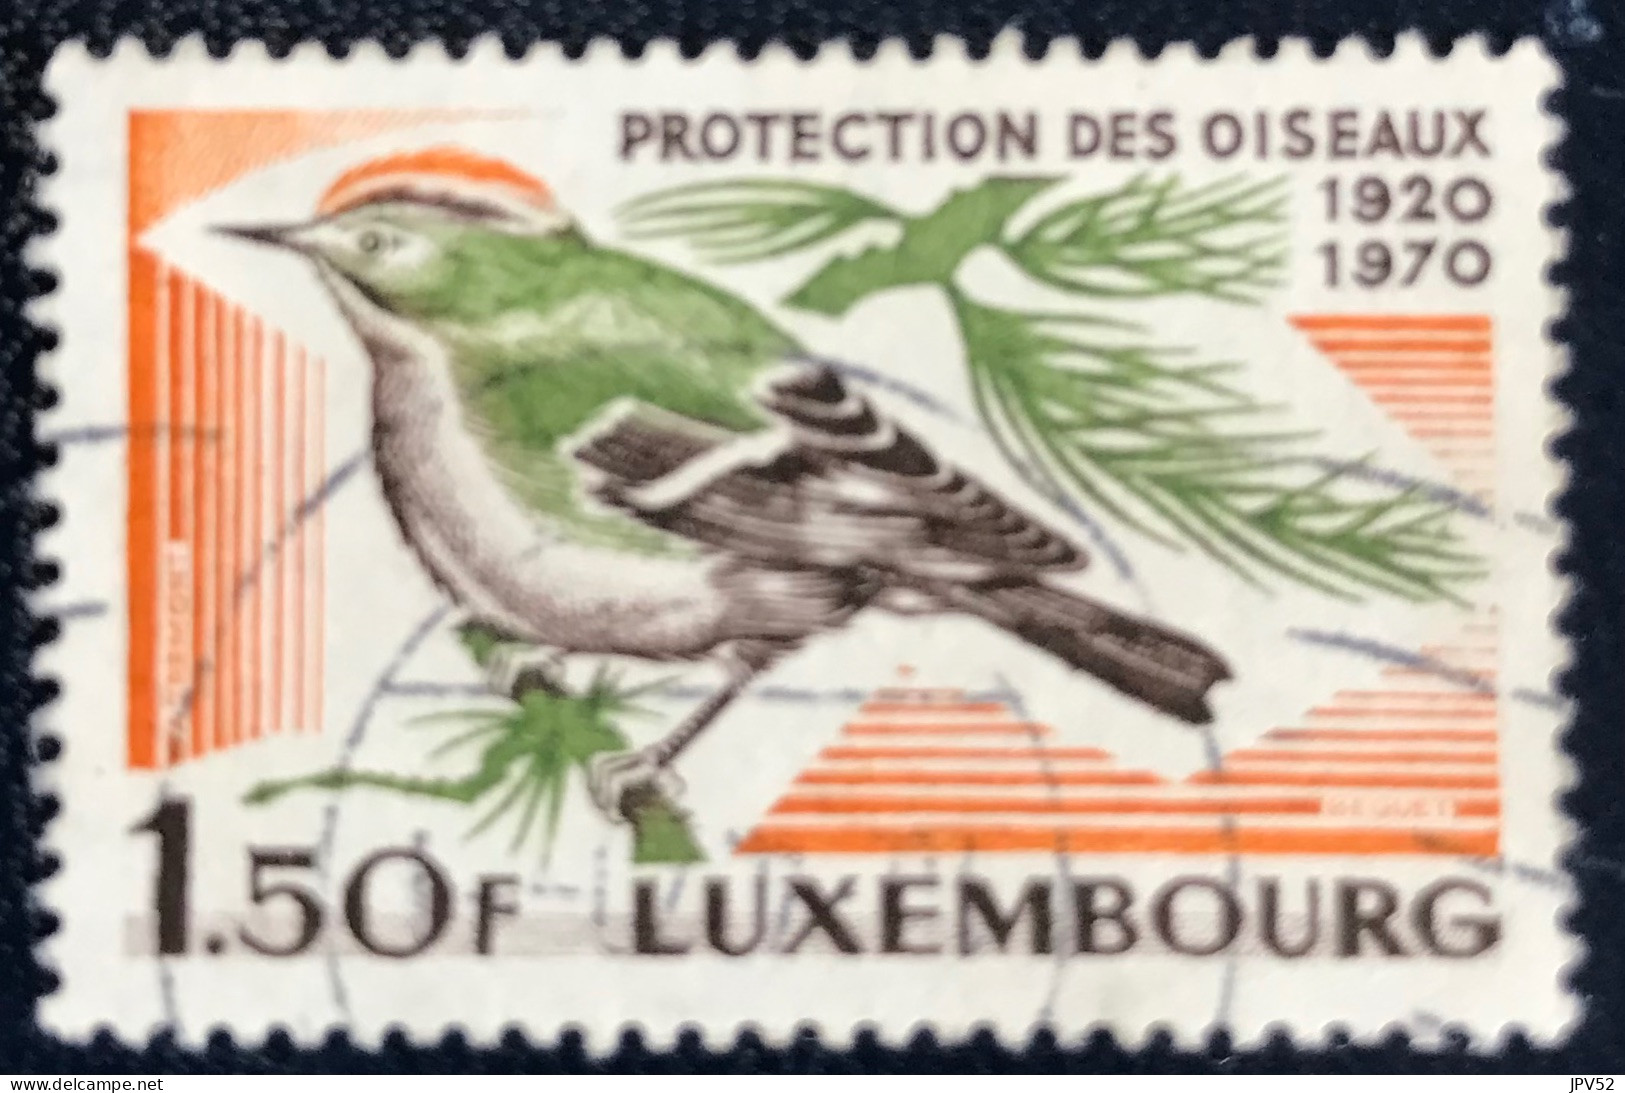 Luxembourg - Luxemburg - C18/32 - 1970 - (°)used - Michel 806 - Vuurgoudhaan - Gebraucht